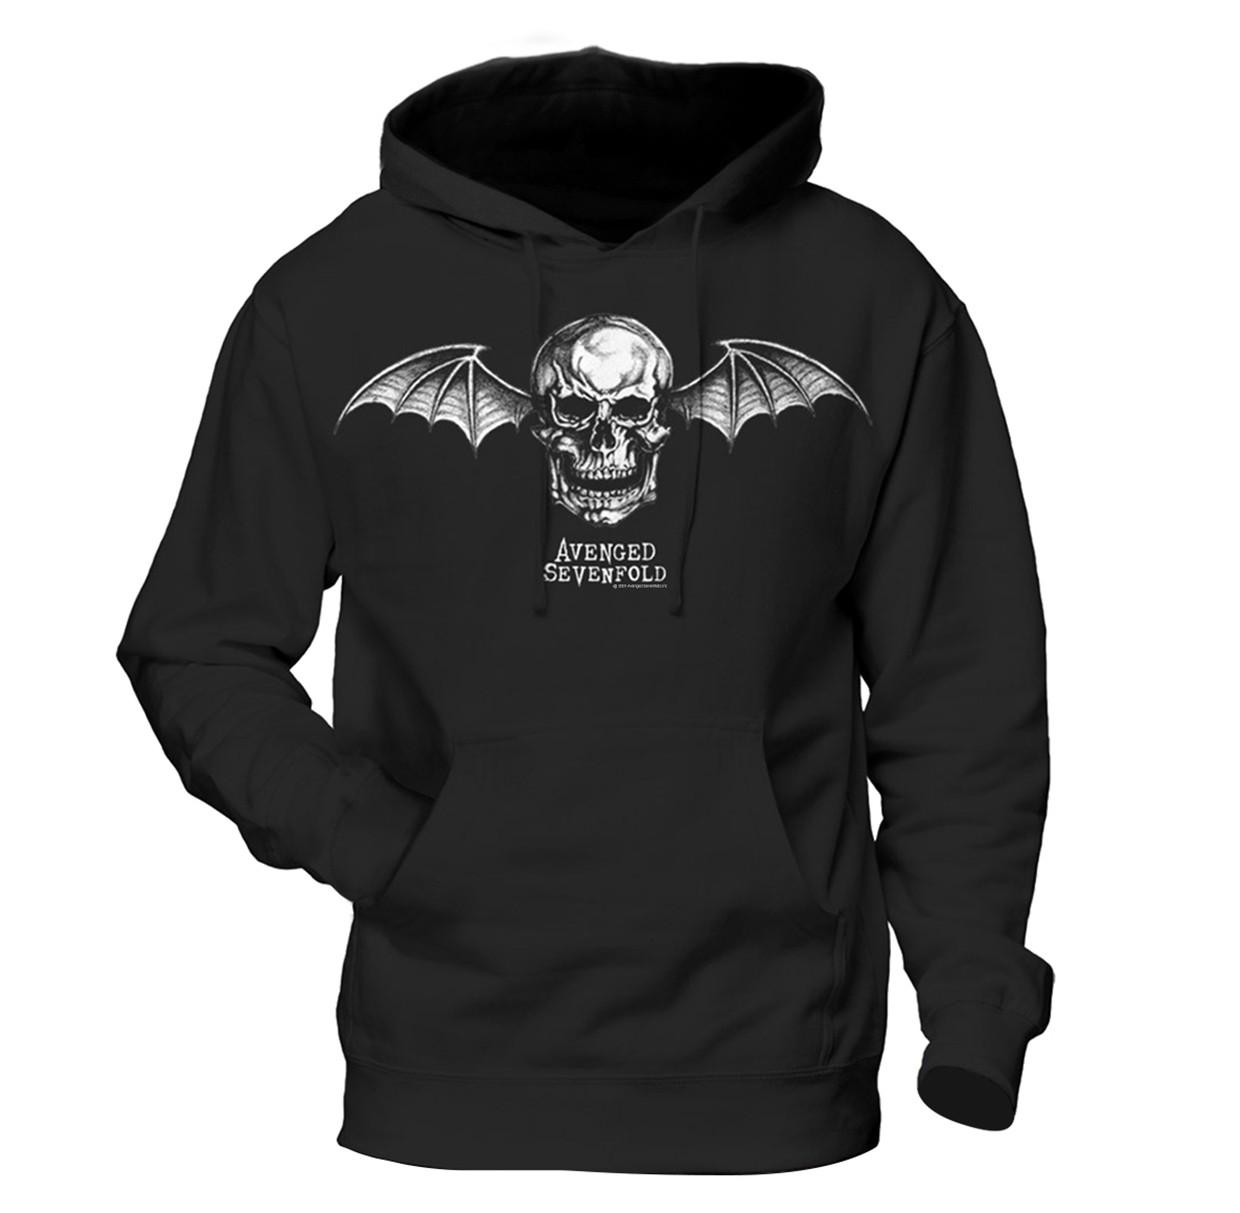 New Bat Logo - Details about Avenged Sevenfold Bat Logo (NEW MENS HOODED SWEATSHIRT )